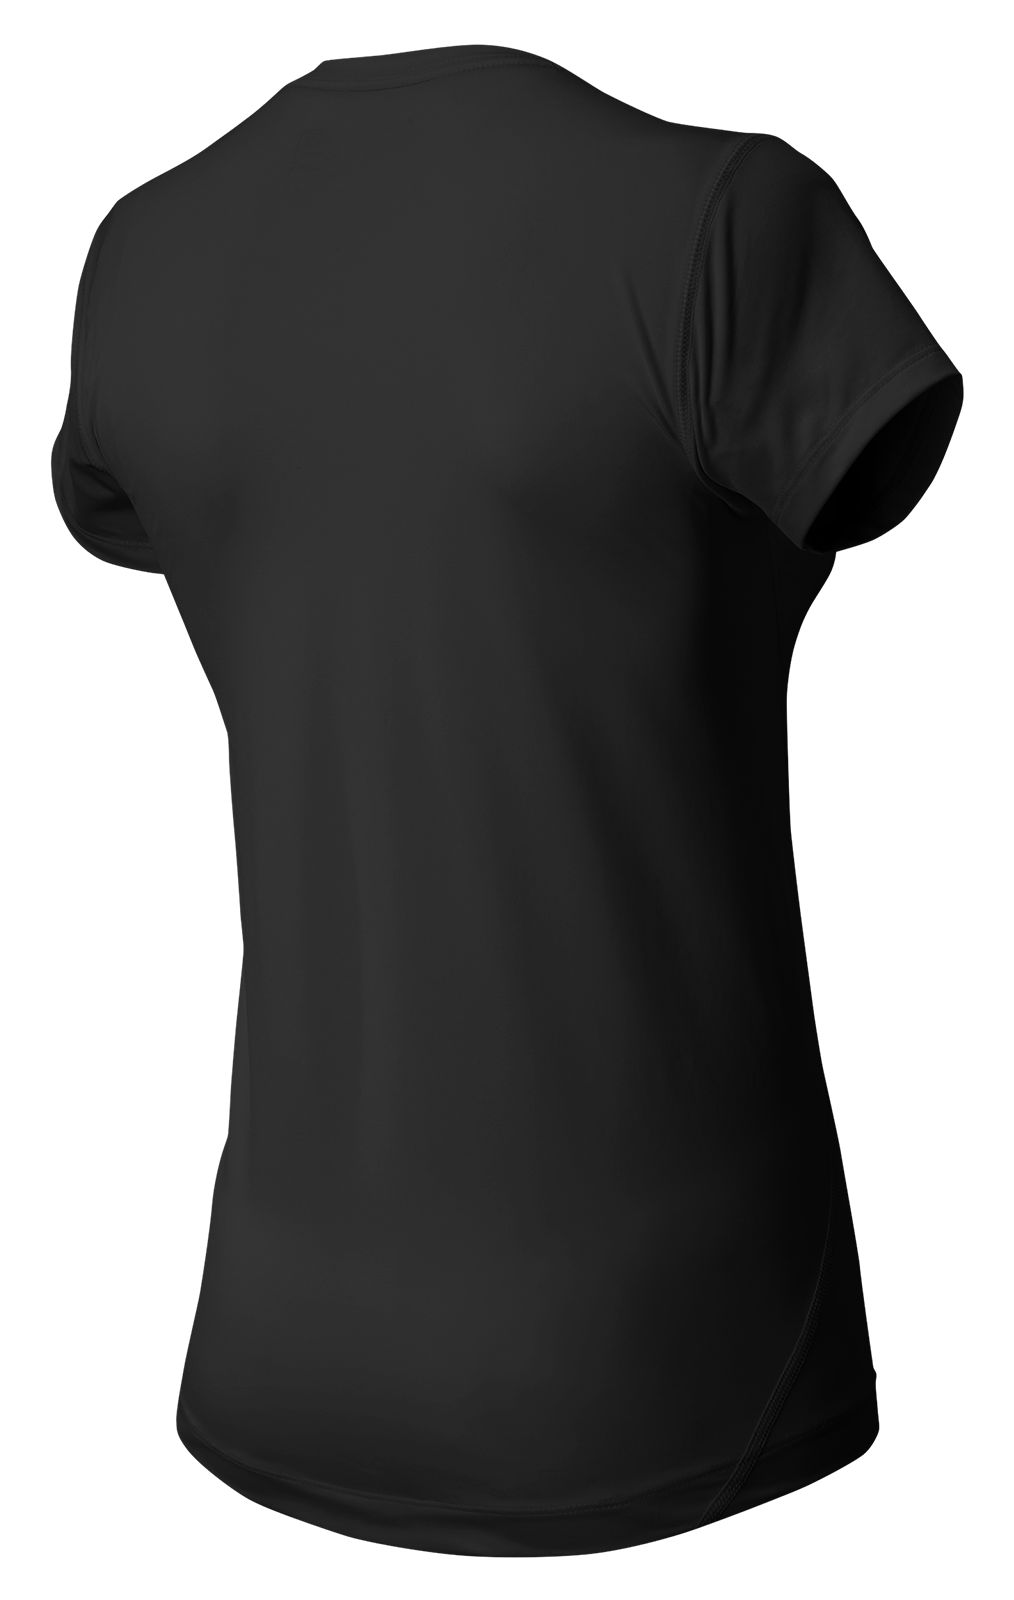 Women's NBW Short Sleeve Compression Top, Team Black image number 1